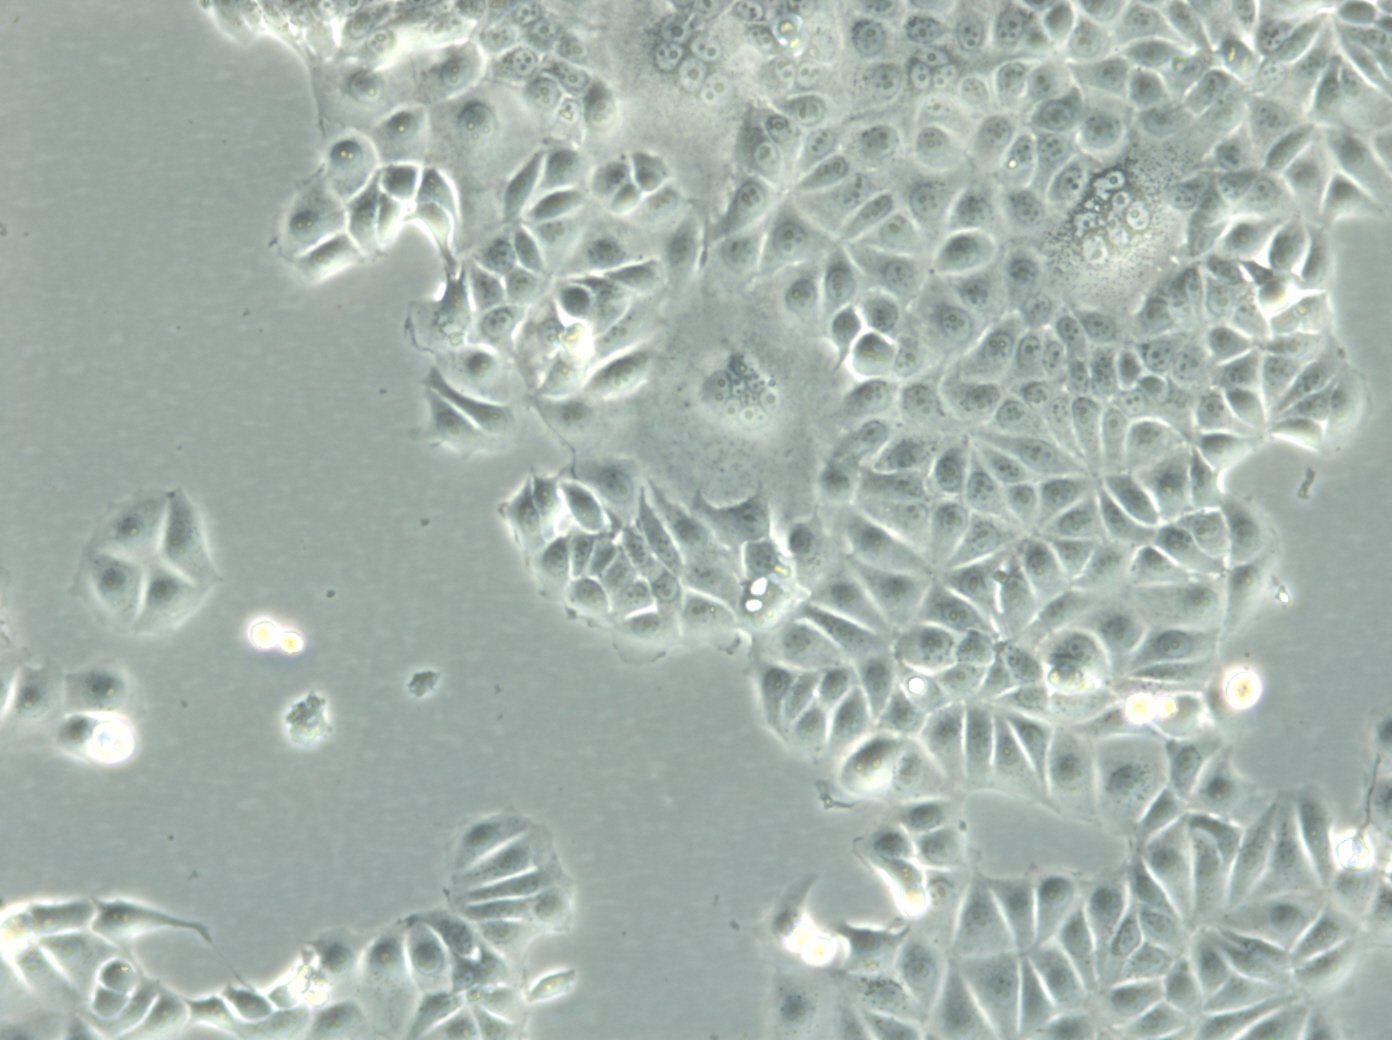 MCF-7 Cells